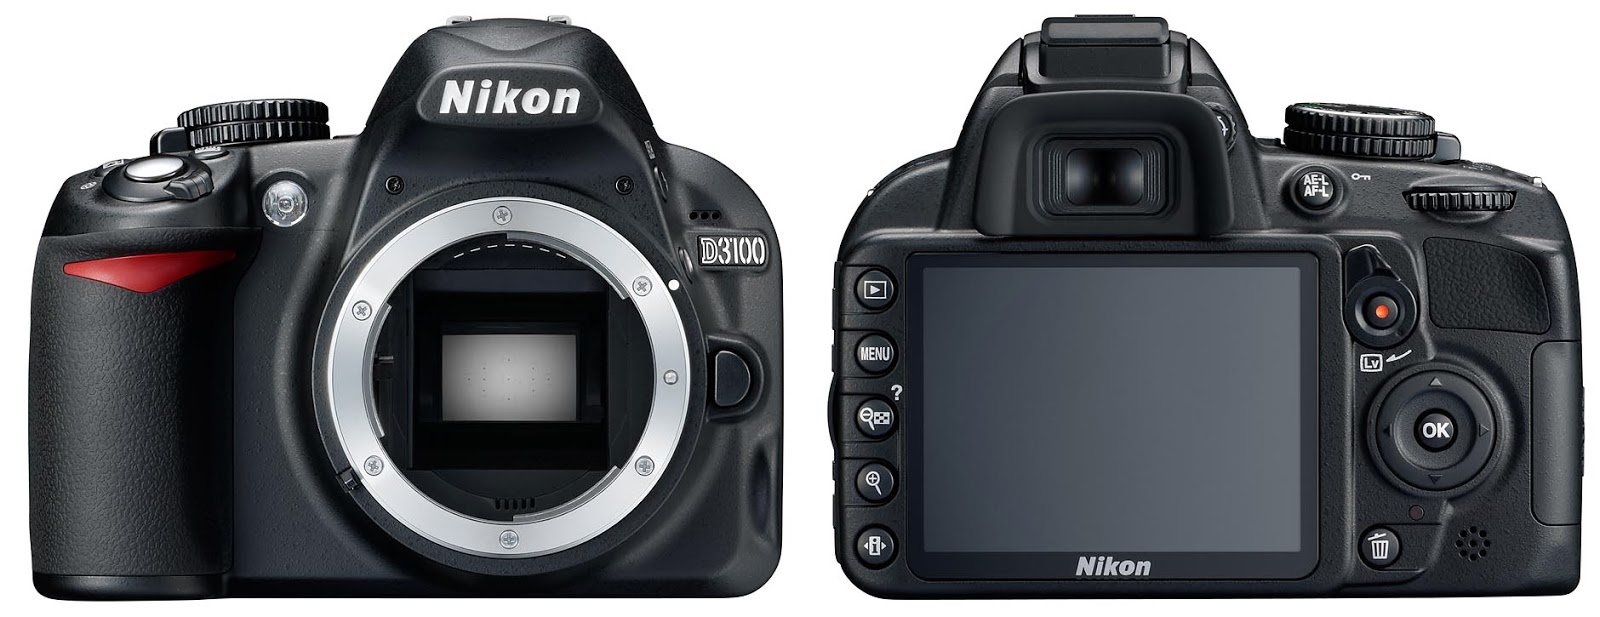 Ngintip Harga Kamera Nikon D3100  Harga Kamera